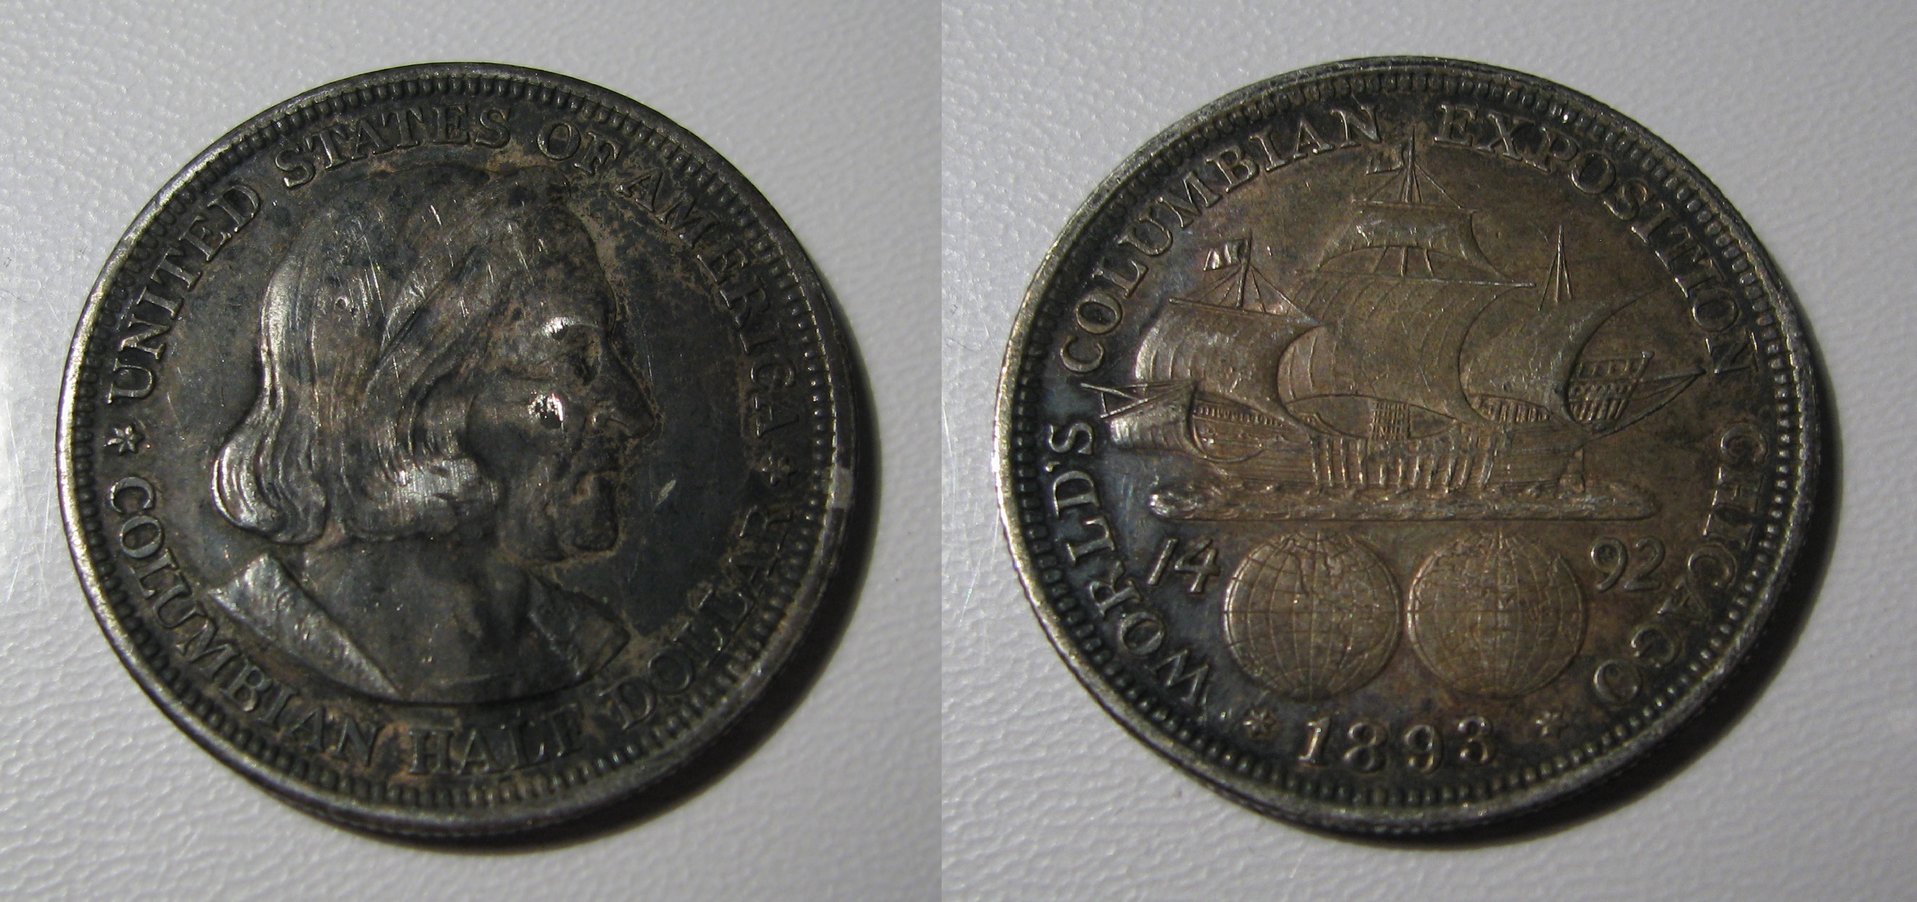 1893 Columbian Exposition Half Dollar 28APR16.jpg